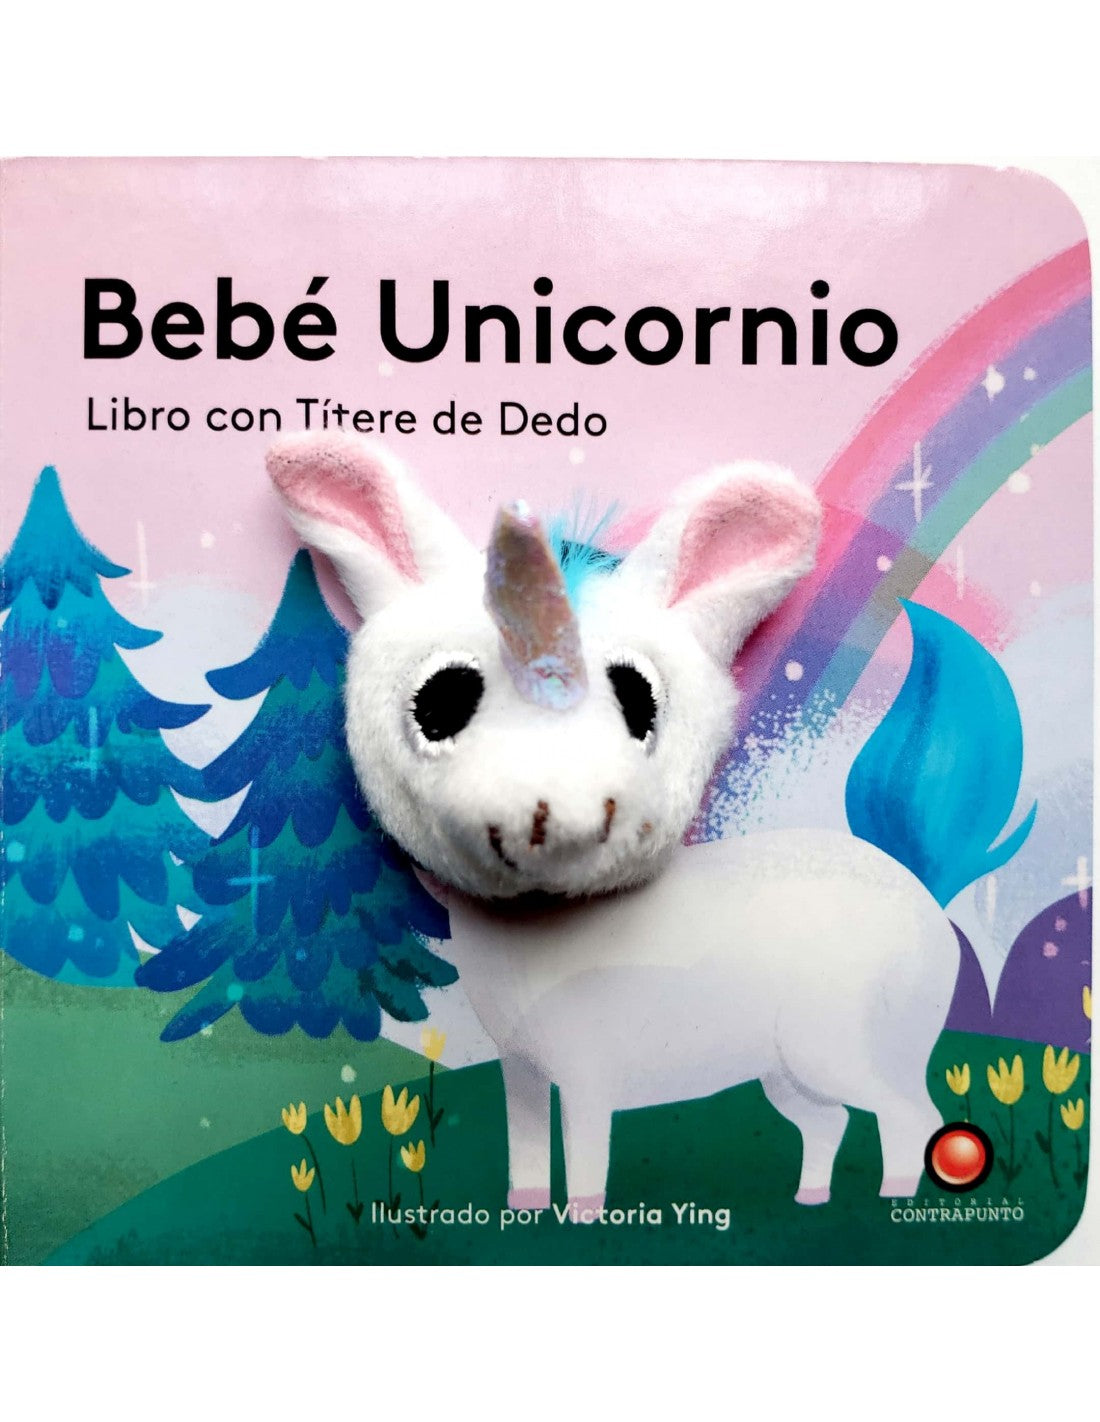 Bebé Unicornio - Libro con Títere de dedo